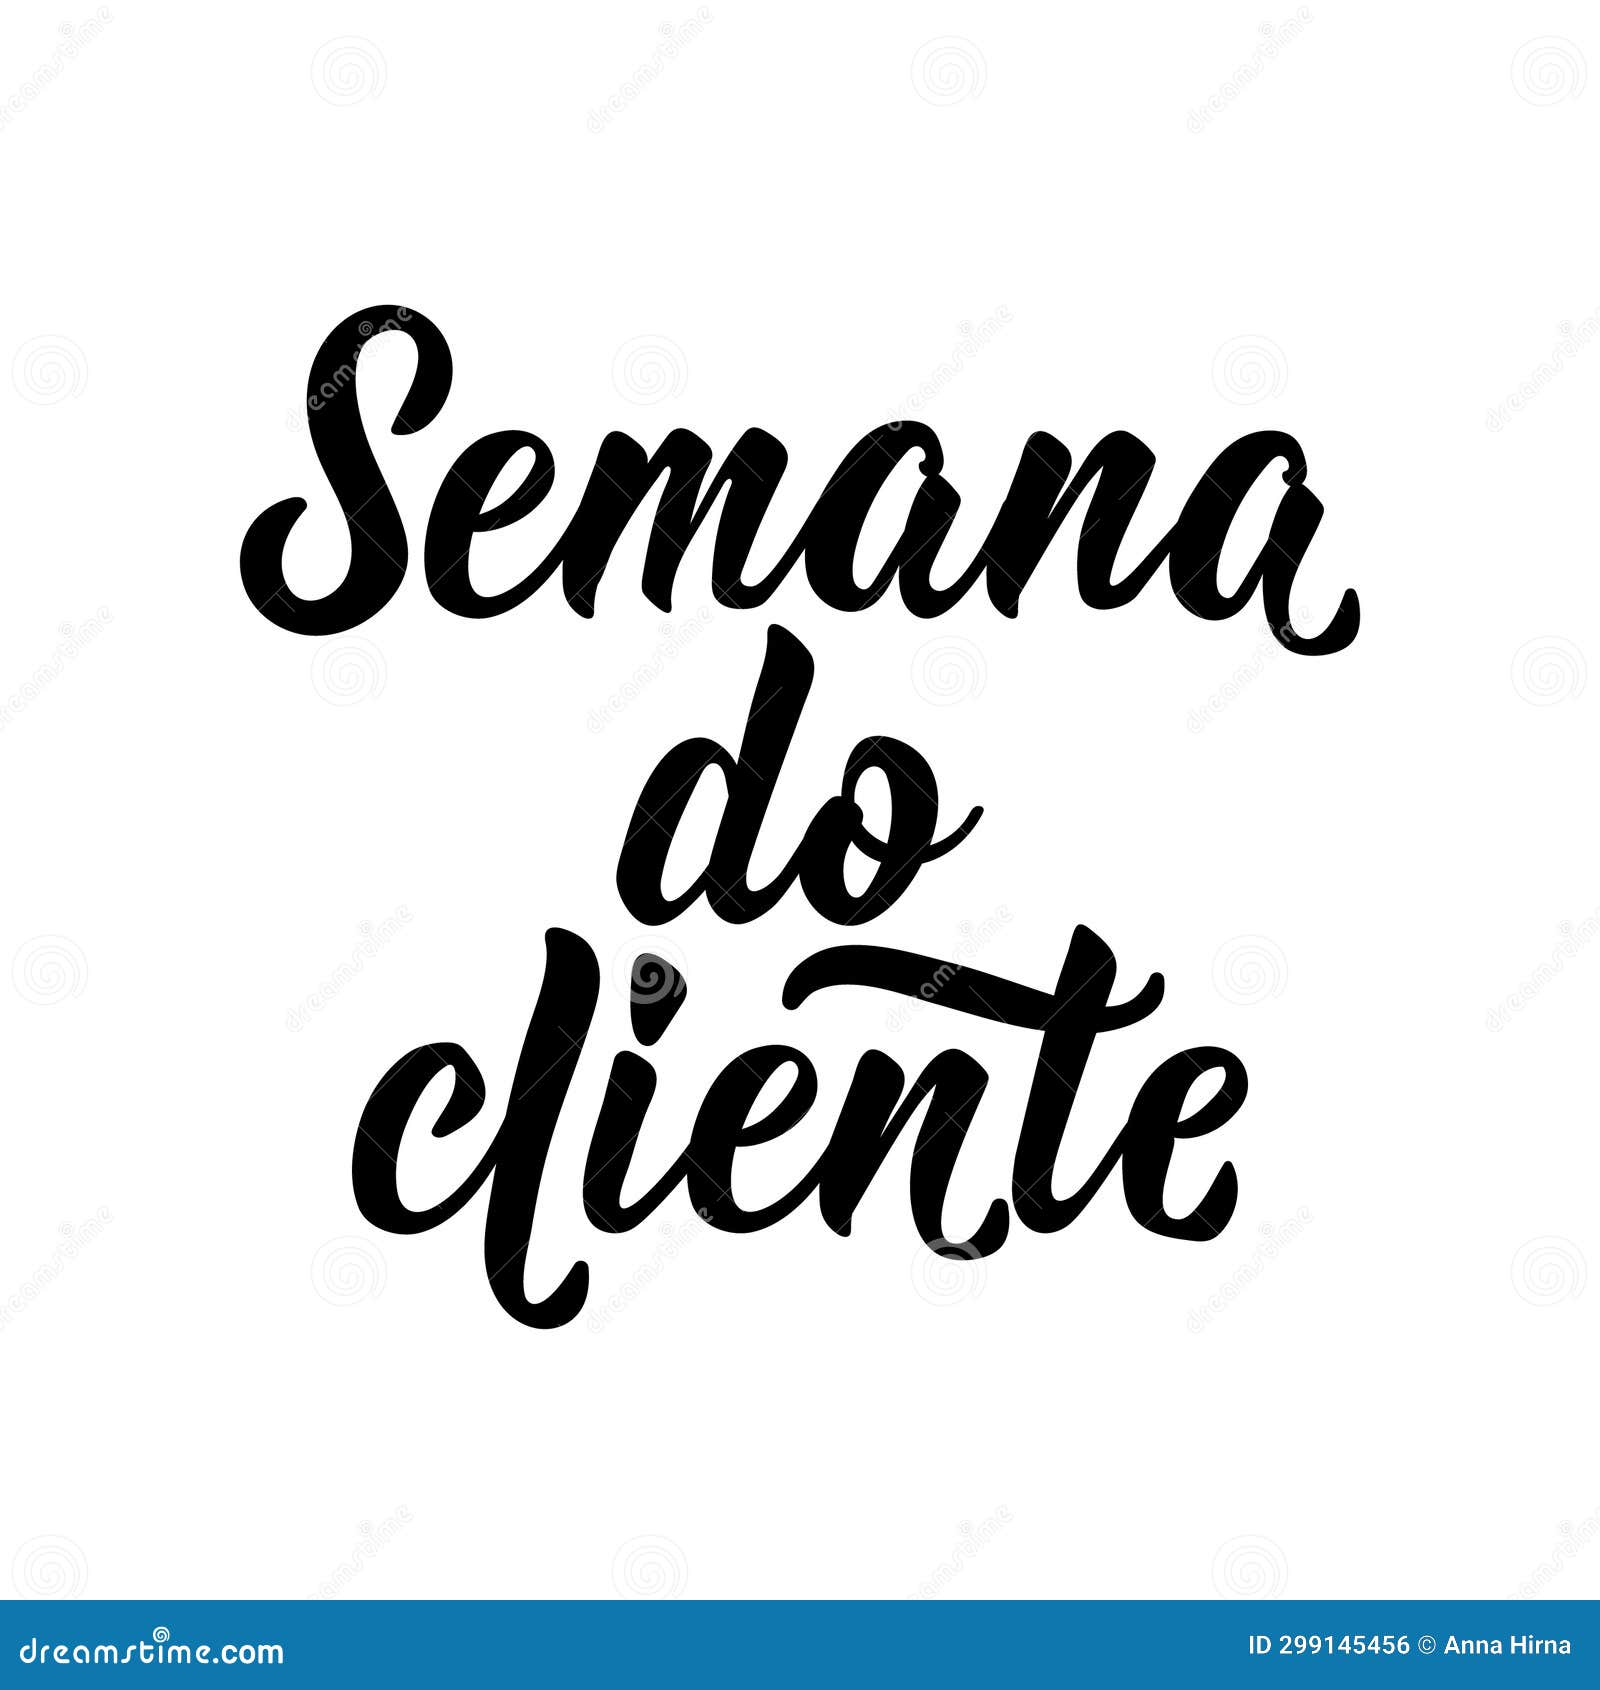 semana do cliente. brazilian lettering. translation from portuguese - customer week. modern  brush calligraphy. ink